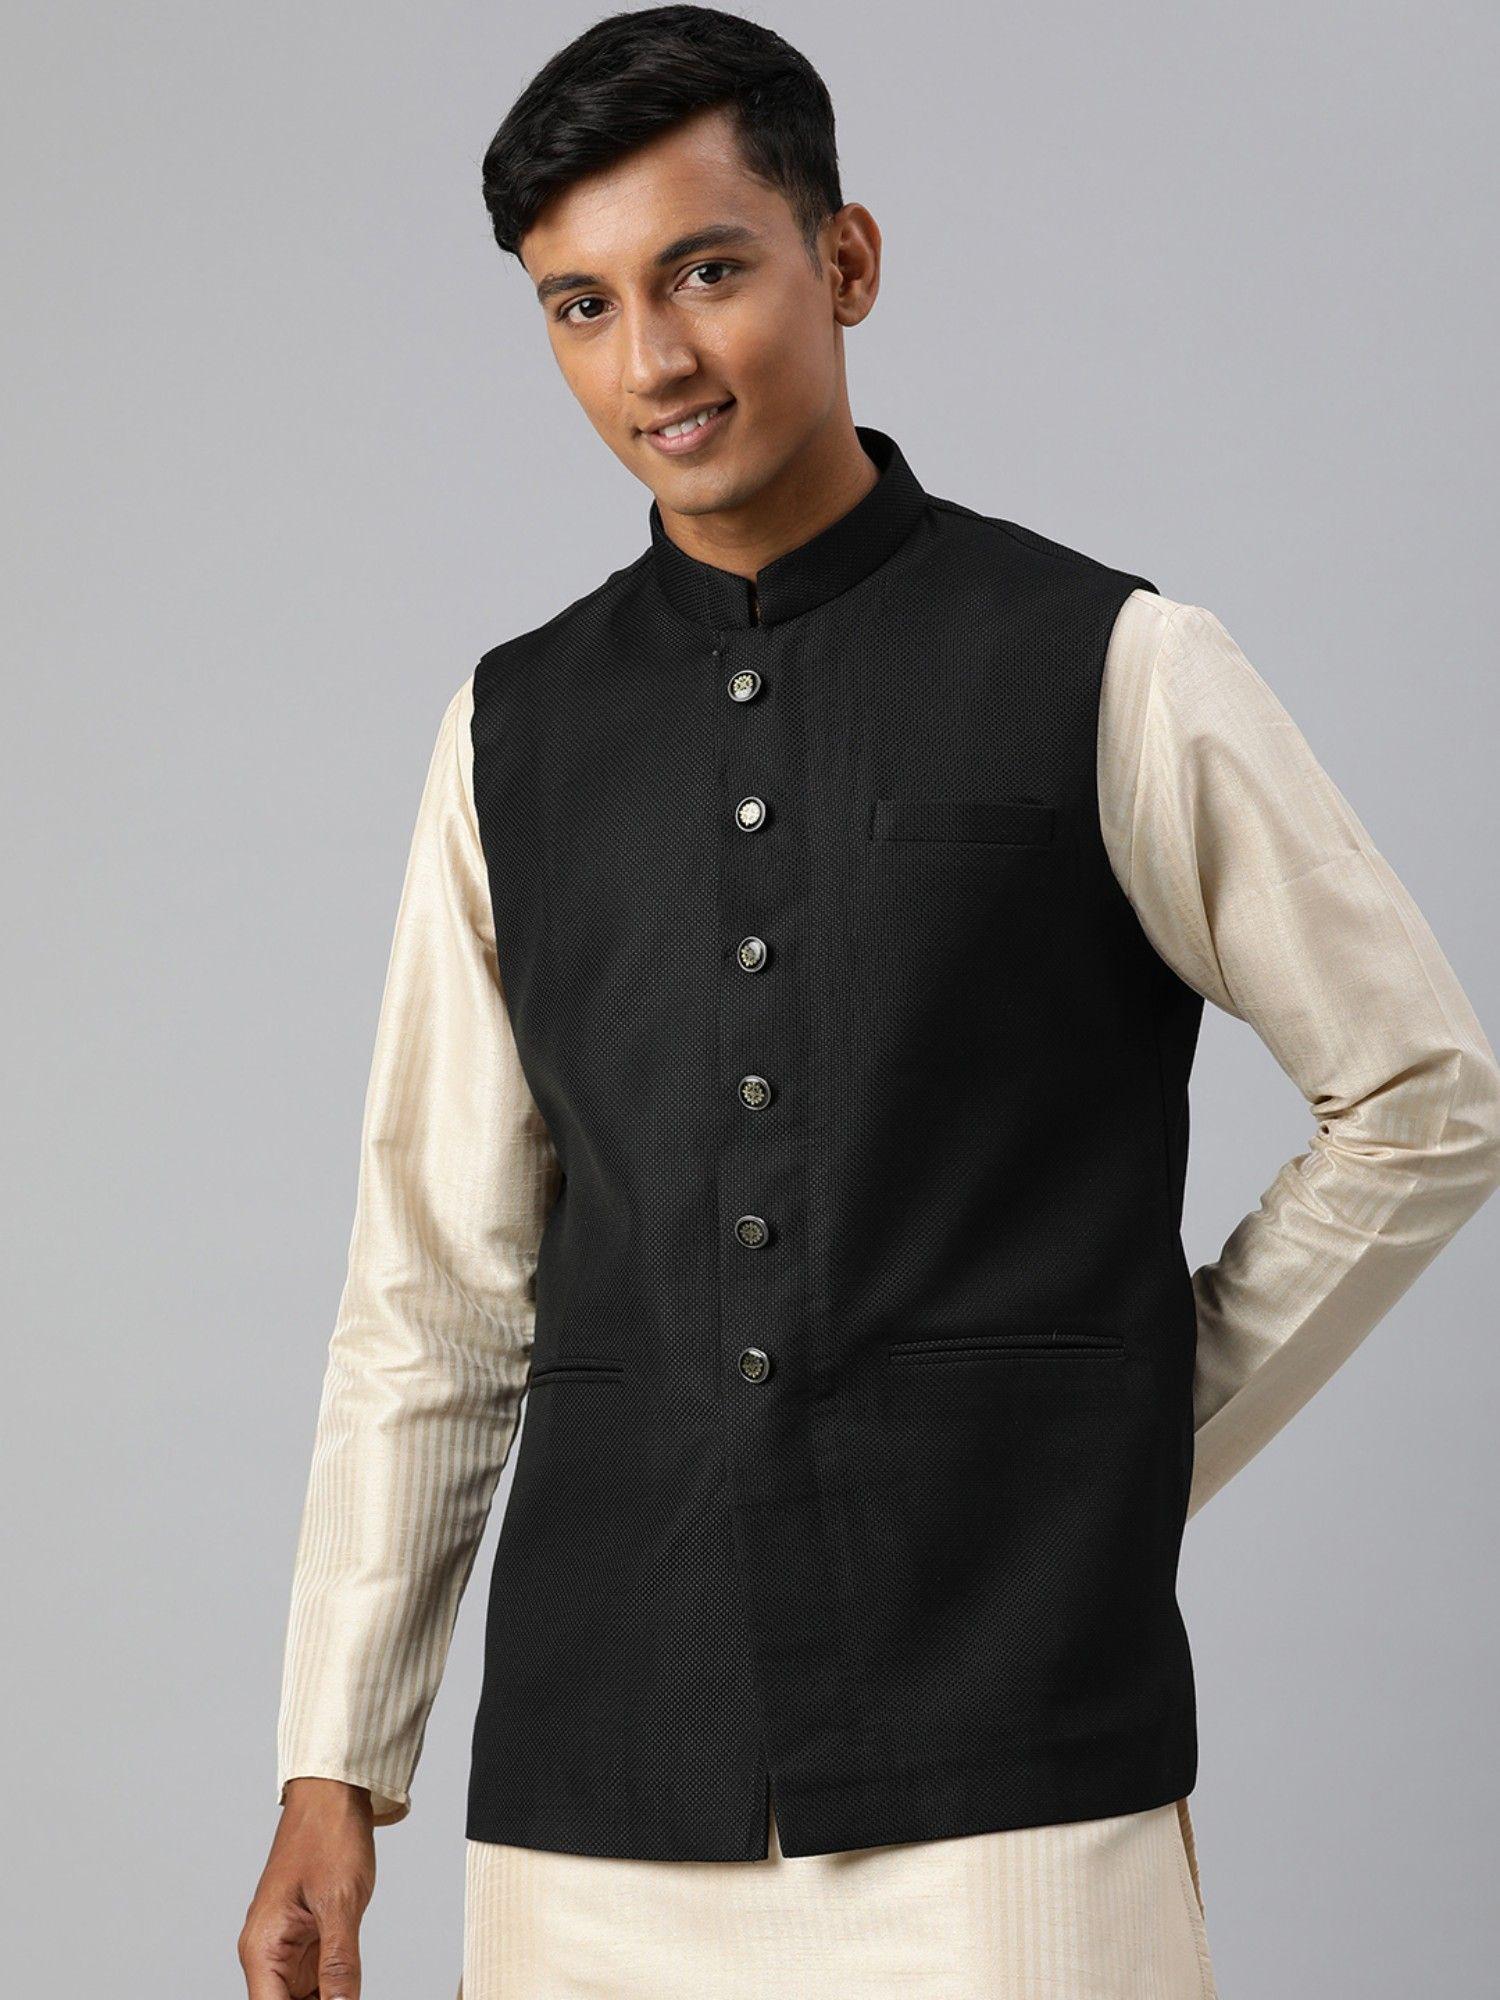 Black Woven Blended Rayon Sleeveless Nehru Jacket